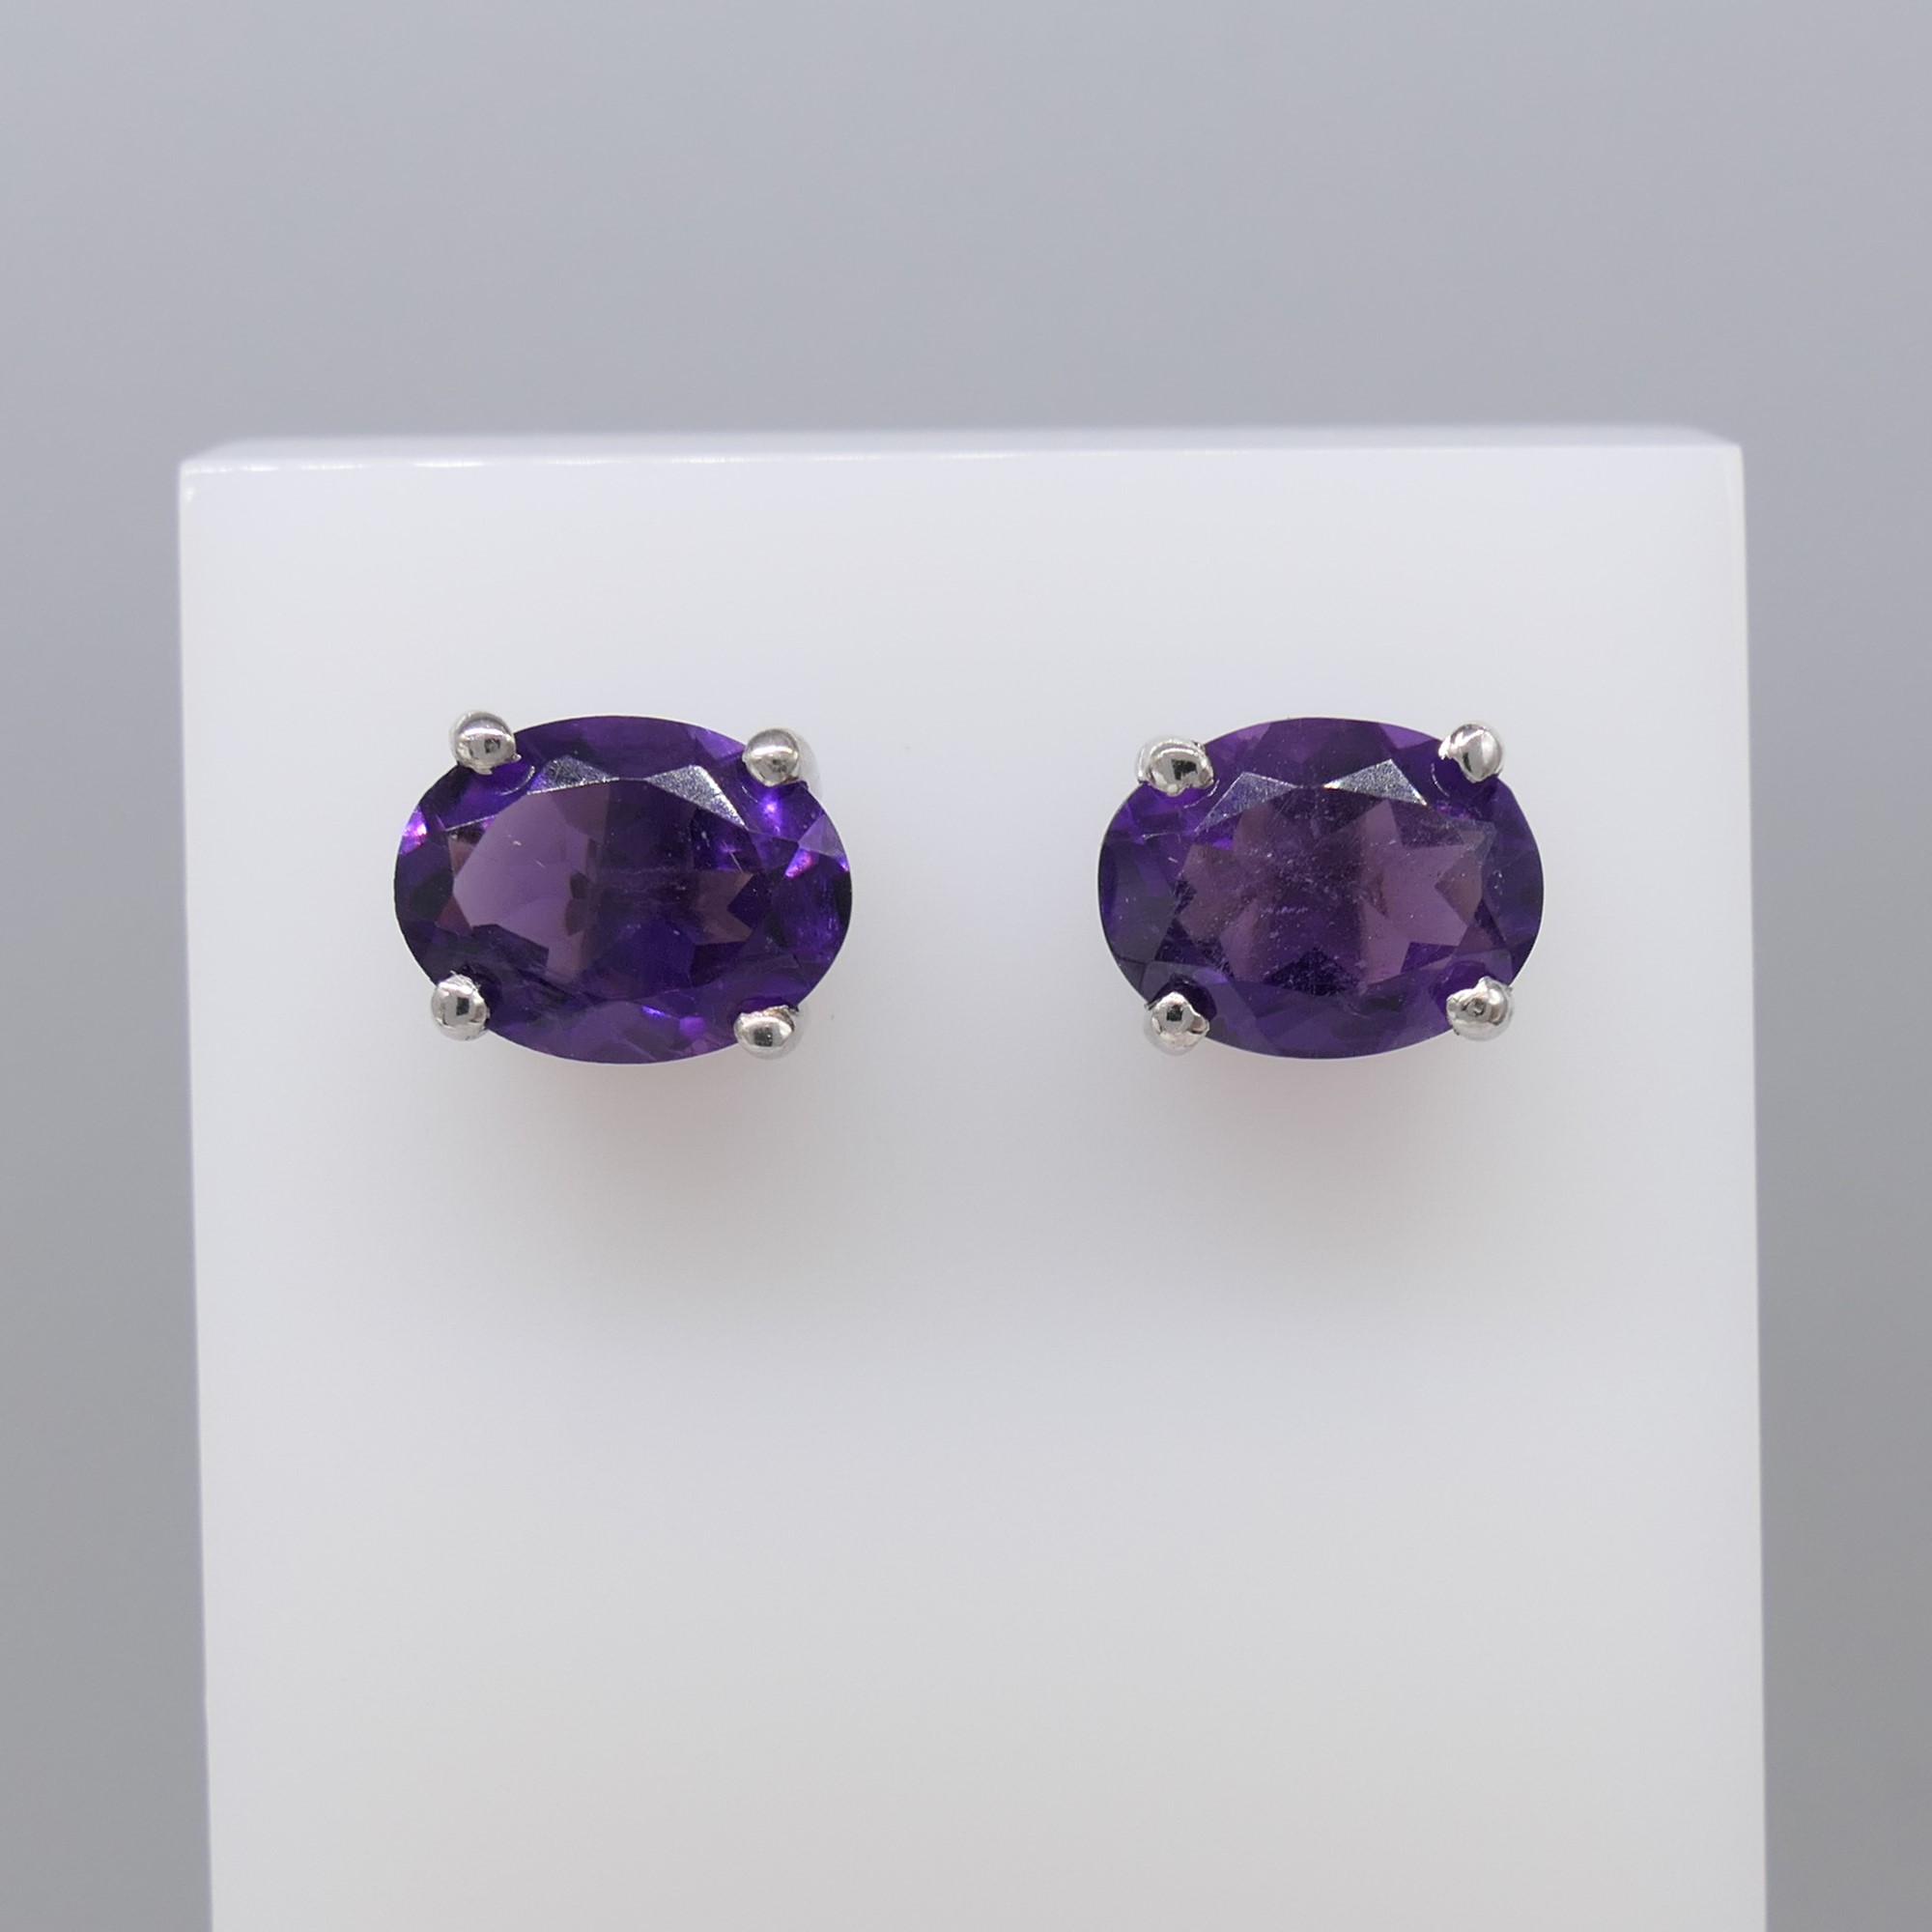 Pair of natural purple amethyst gemstone ear studs in silver - Image 5 of 5